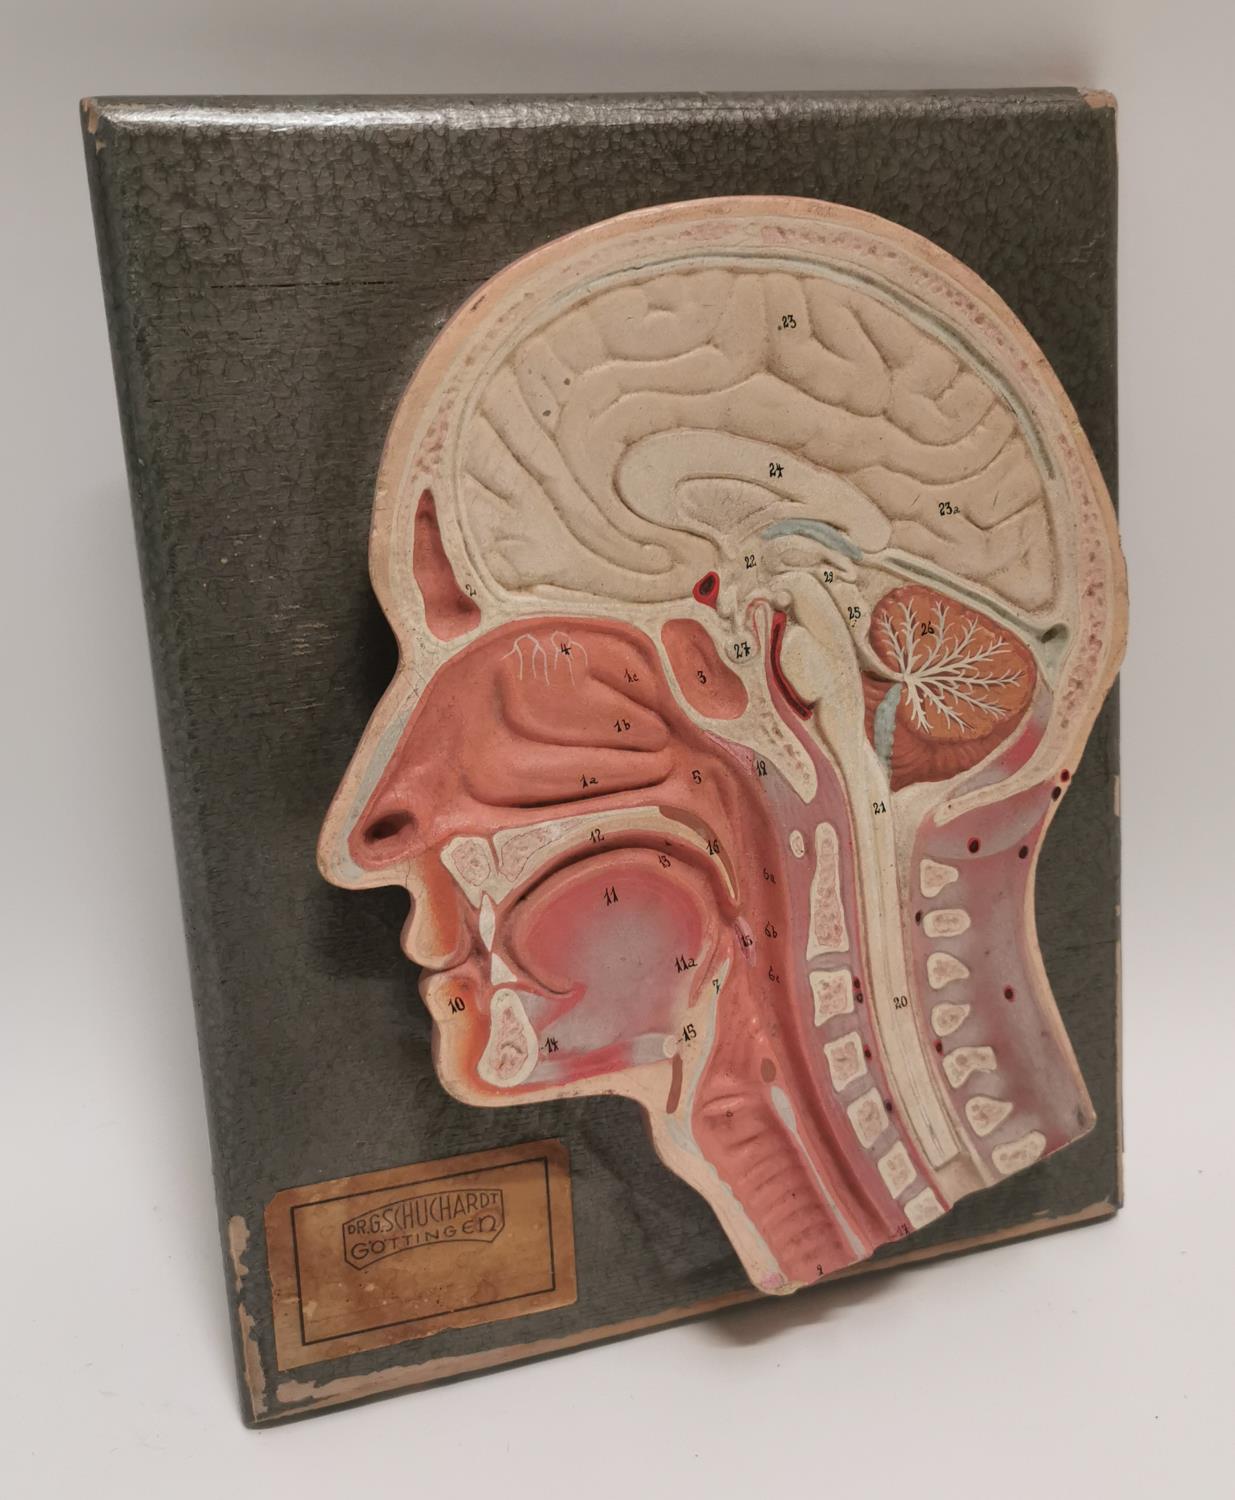 Early 20th C. rubberoid head anatomy medical model.